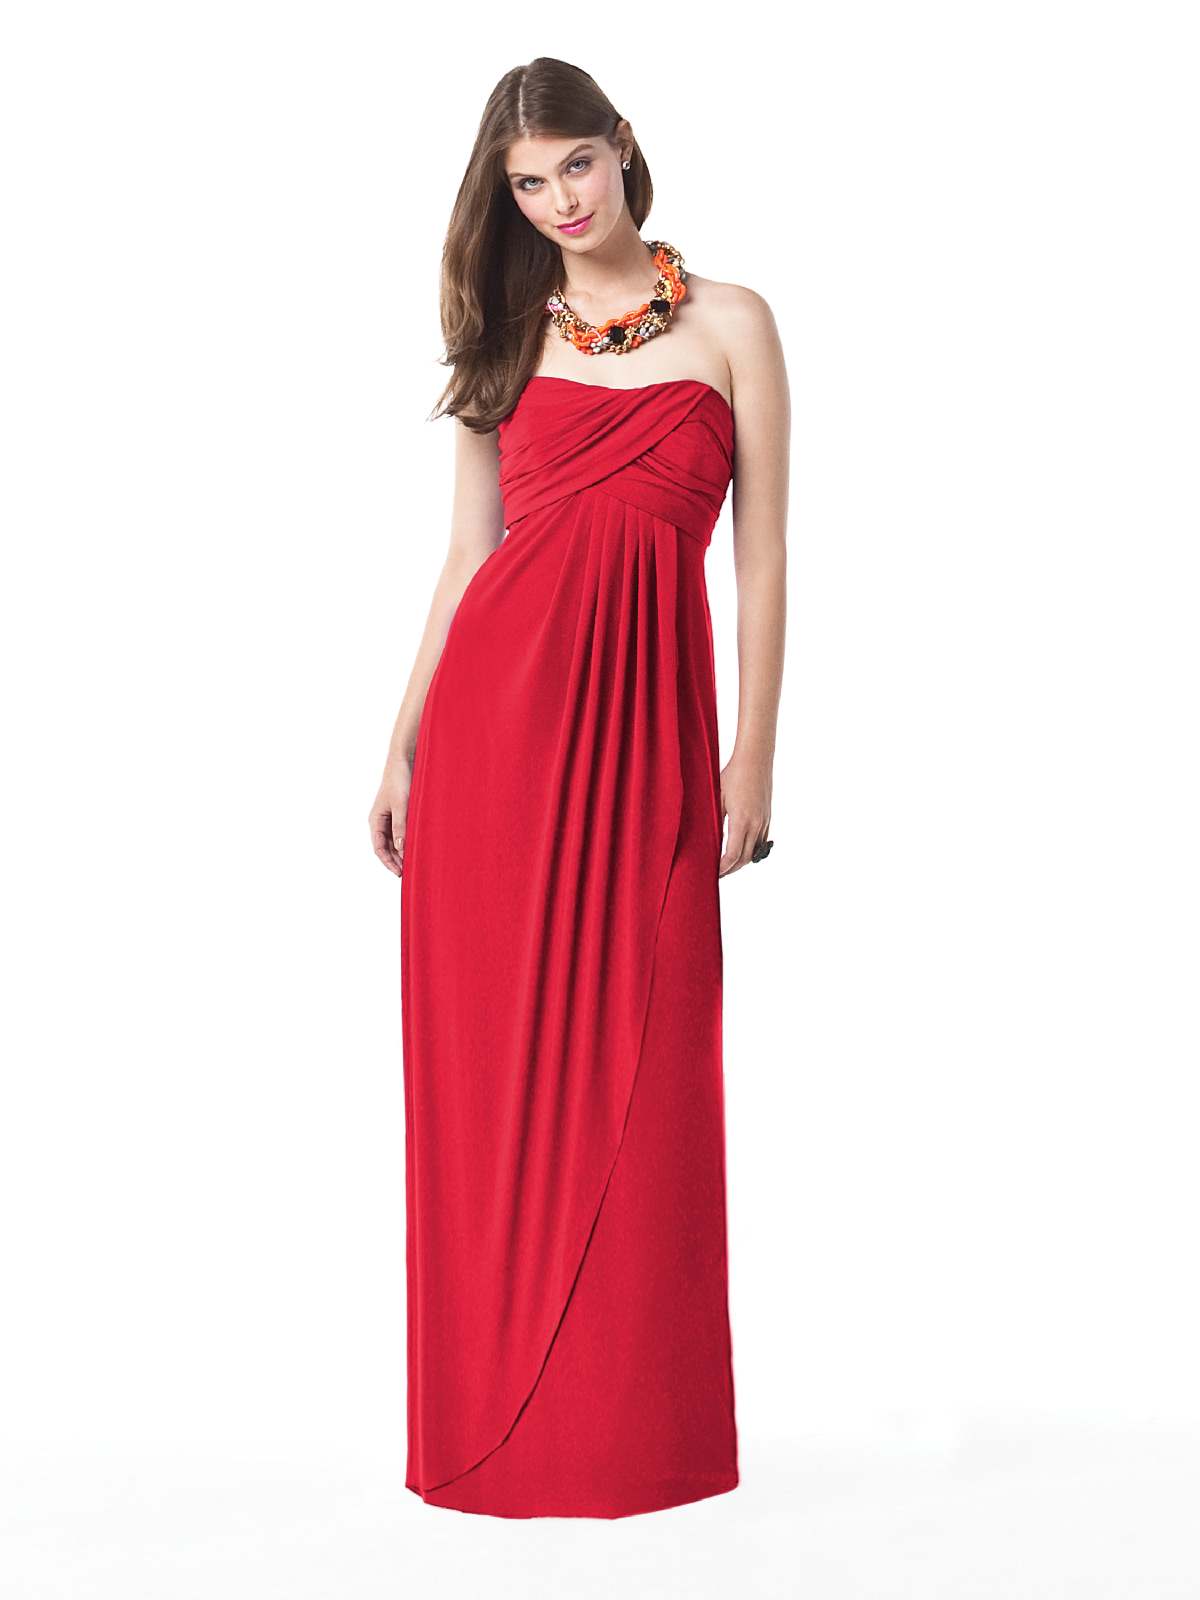 Red Empire Strapless Drape Floor Length Chiffon Prom Dresses With Ruffles 